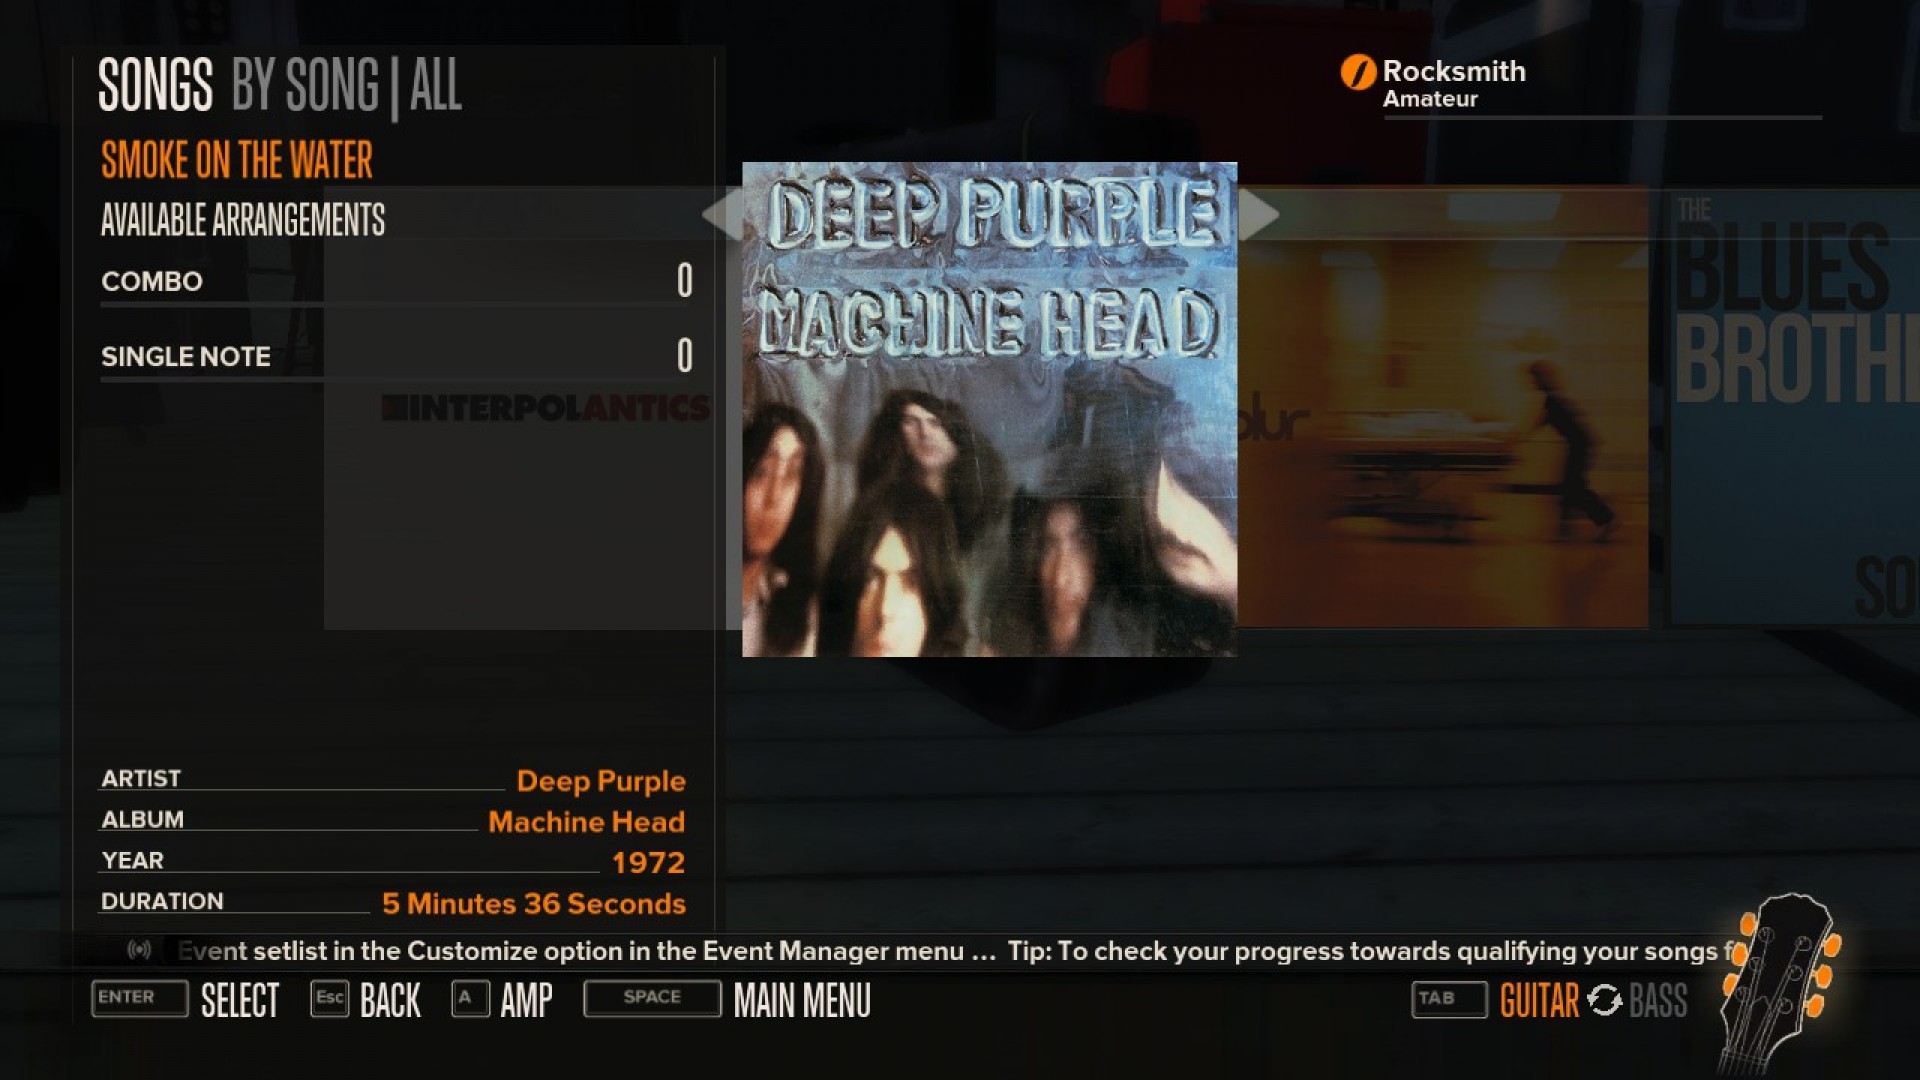 Rocksmith - Deep Purple - Smoke on the Water screenshot